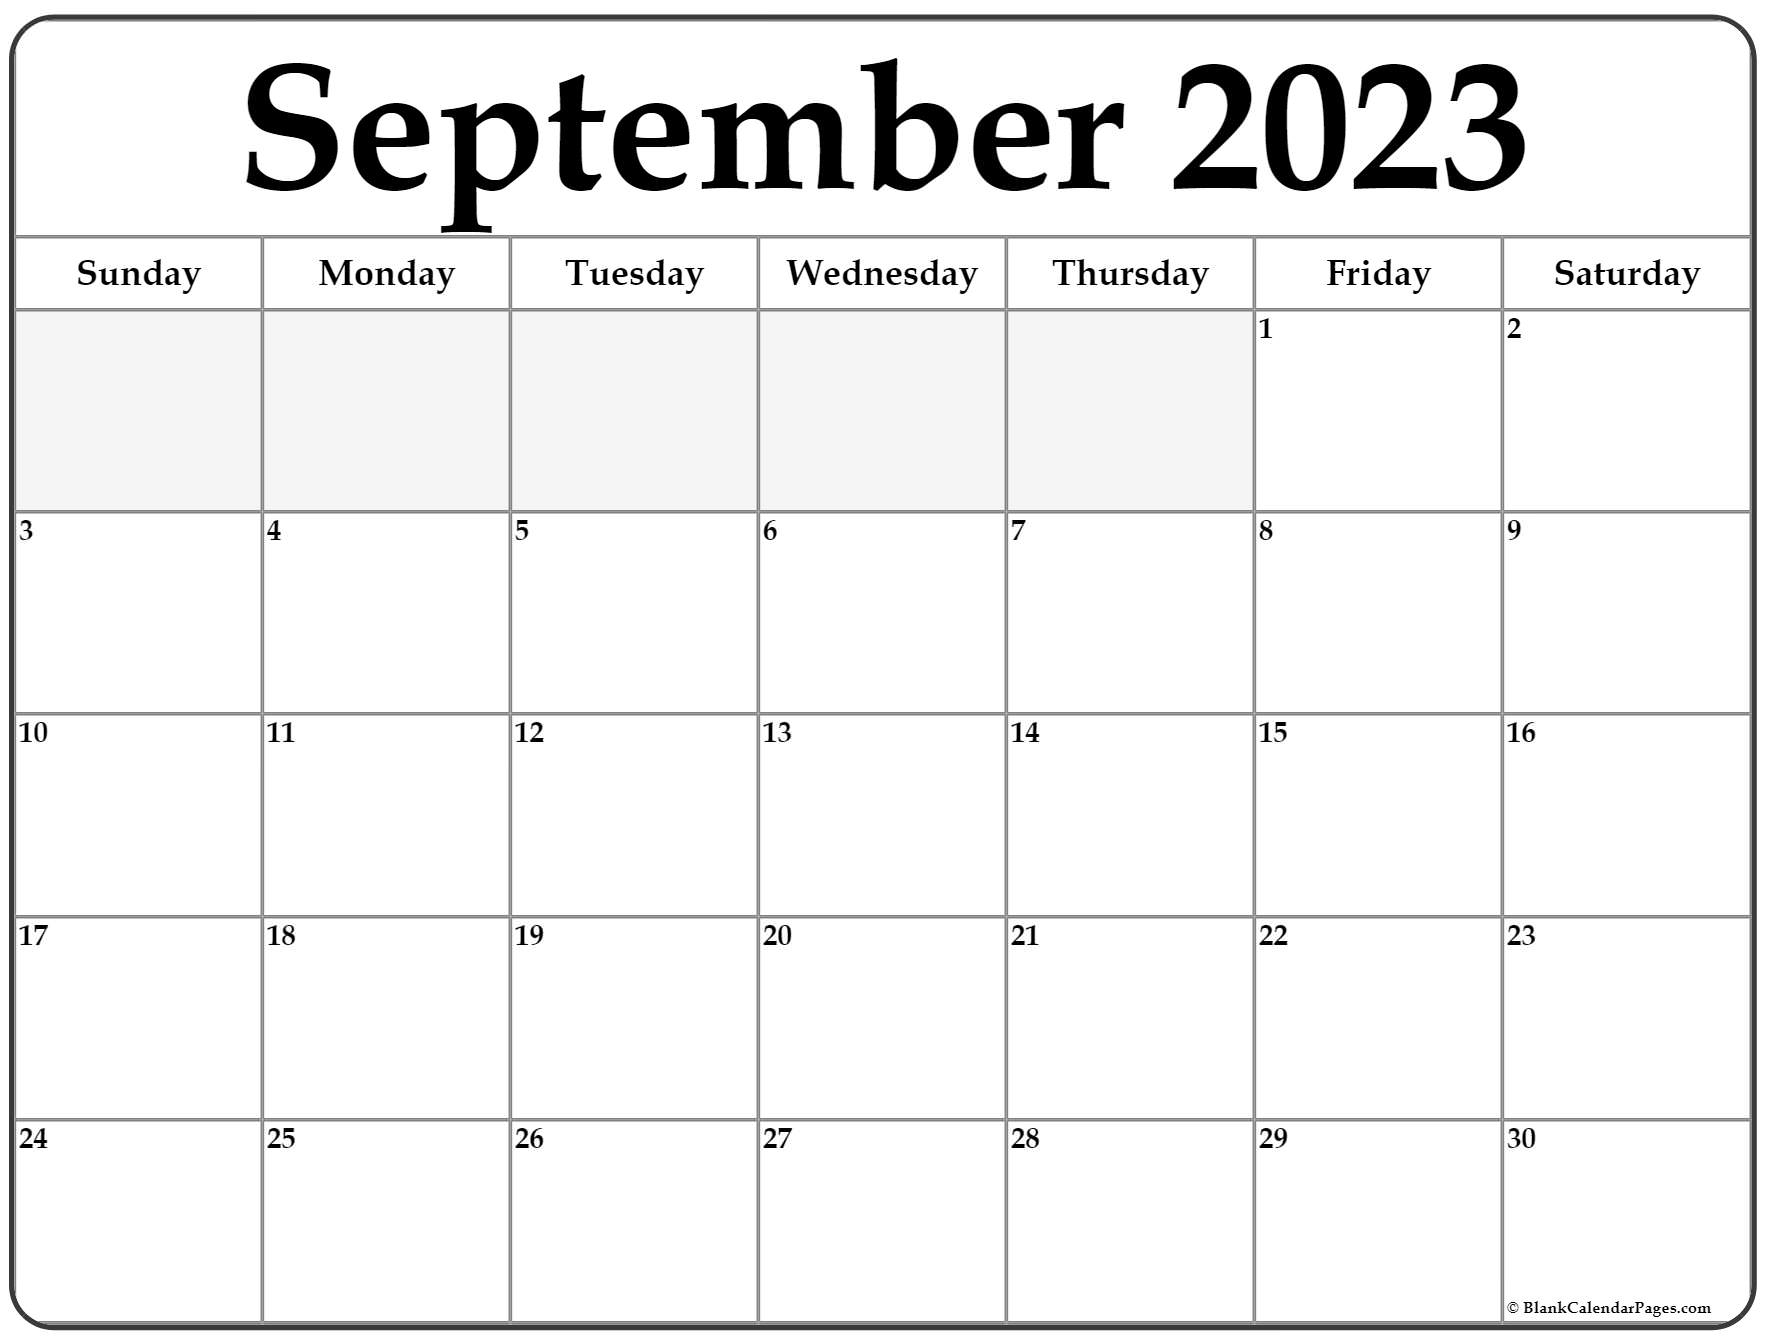 September 2023 Calendar | Free Printable Calendar